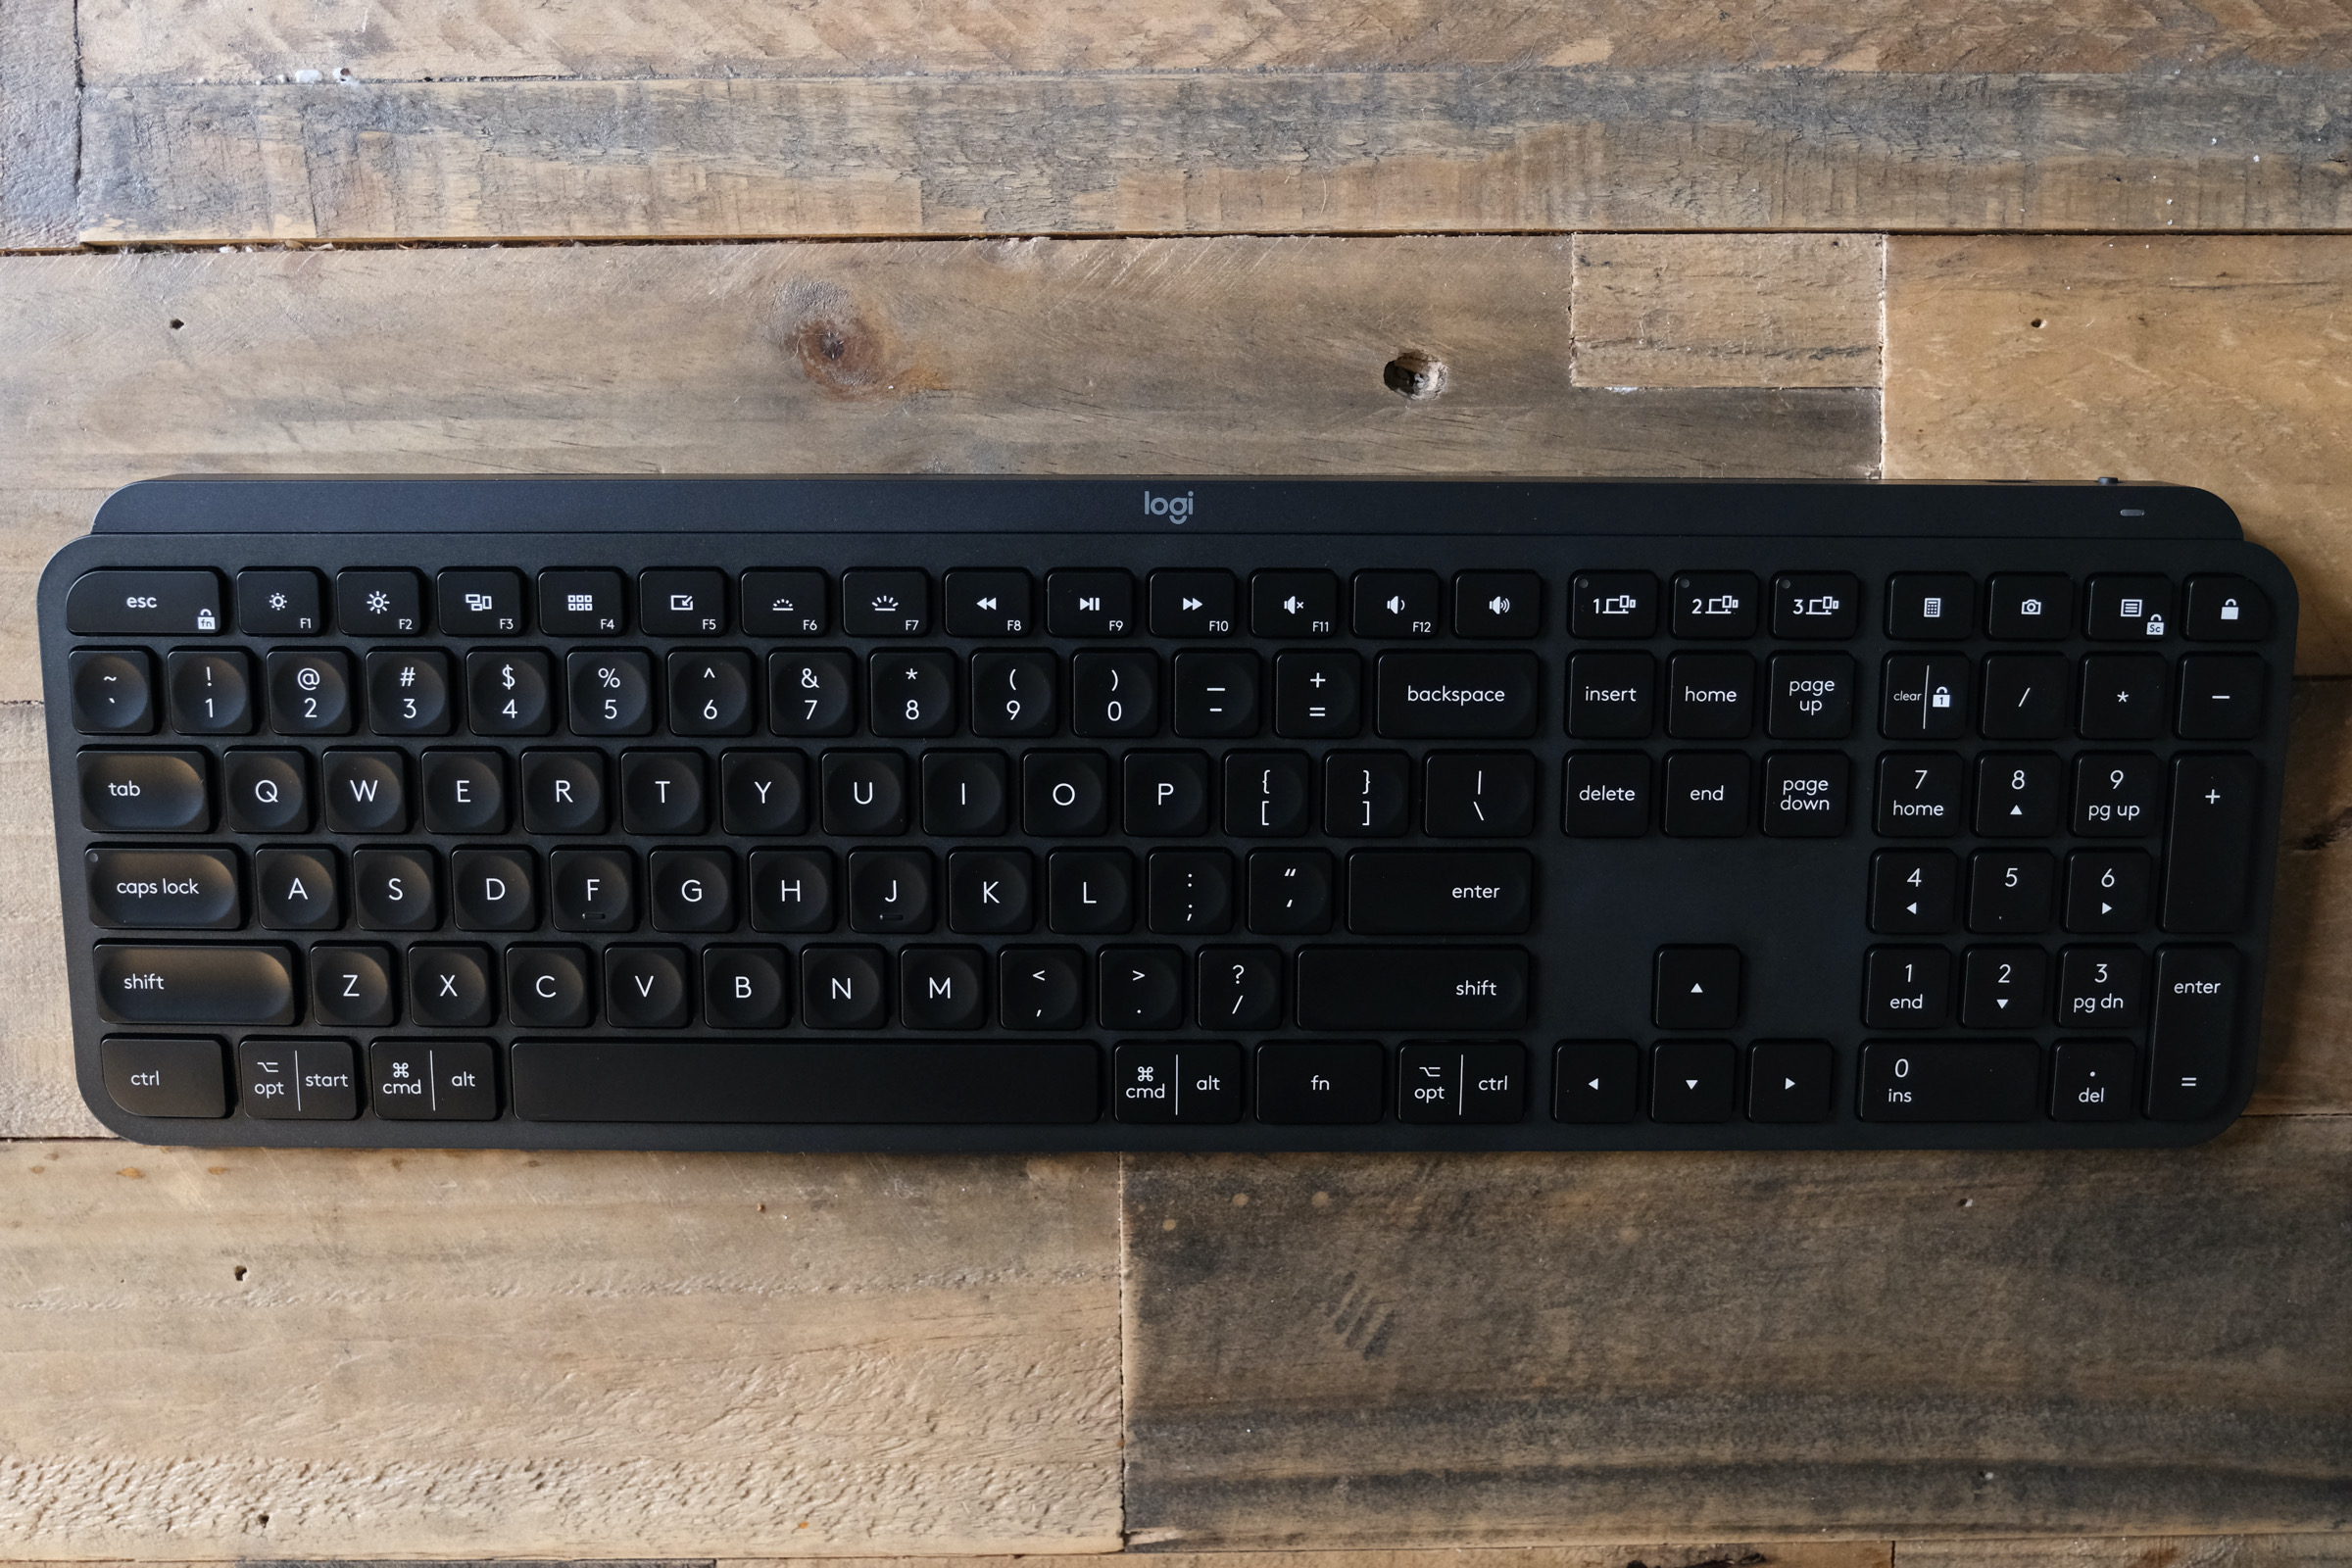 Logitech S Mx Master 3 Mouse And Mx Keys Keyboard Should Be Your Setup Of Choice Internet Technology News